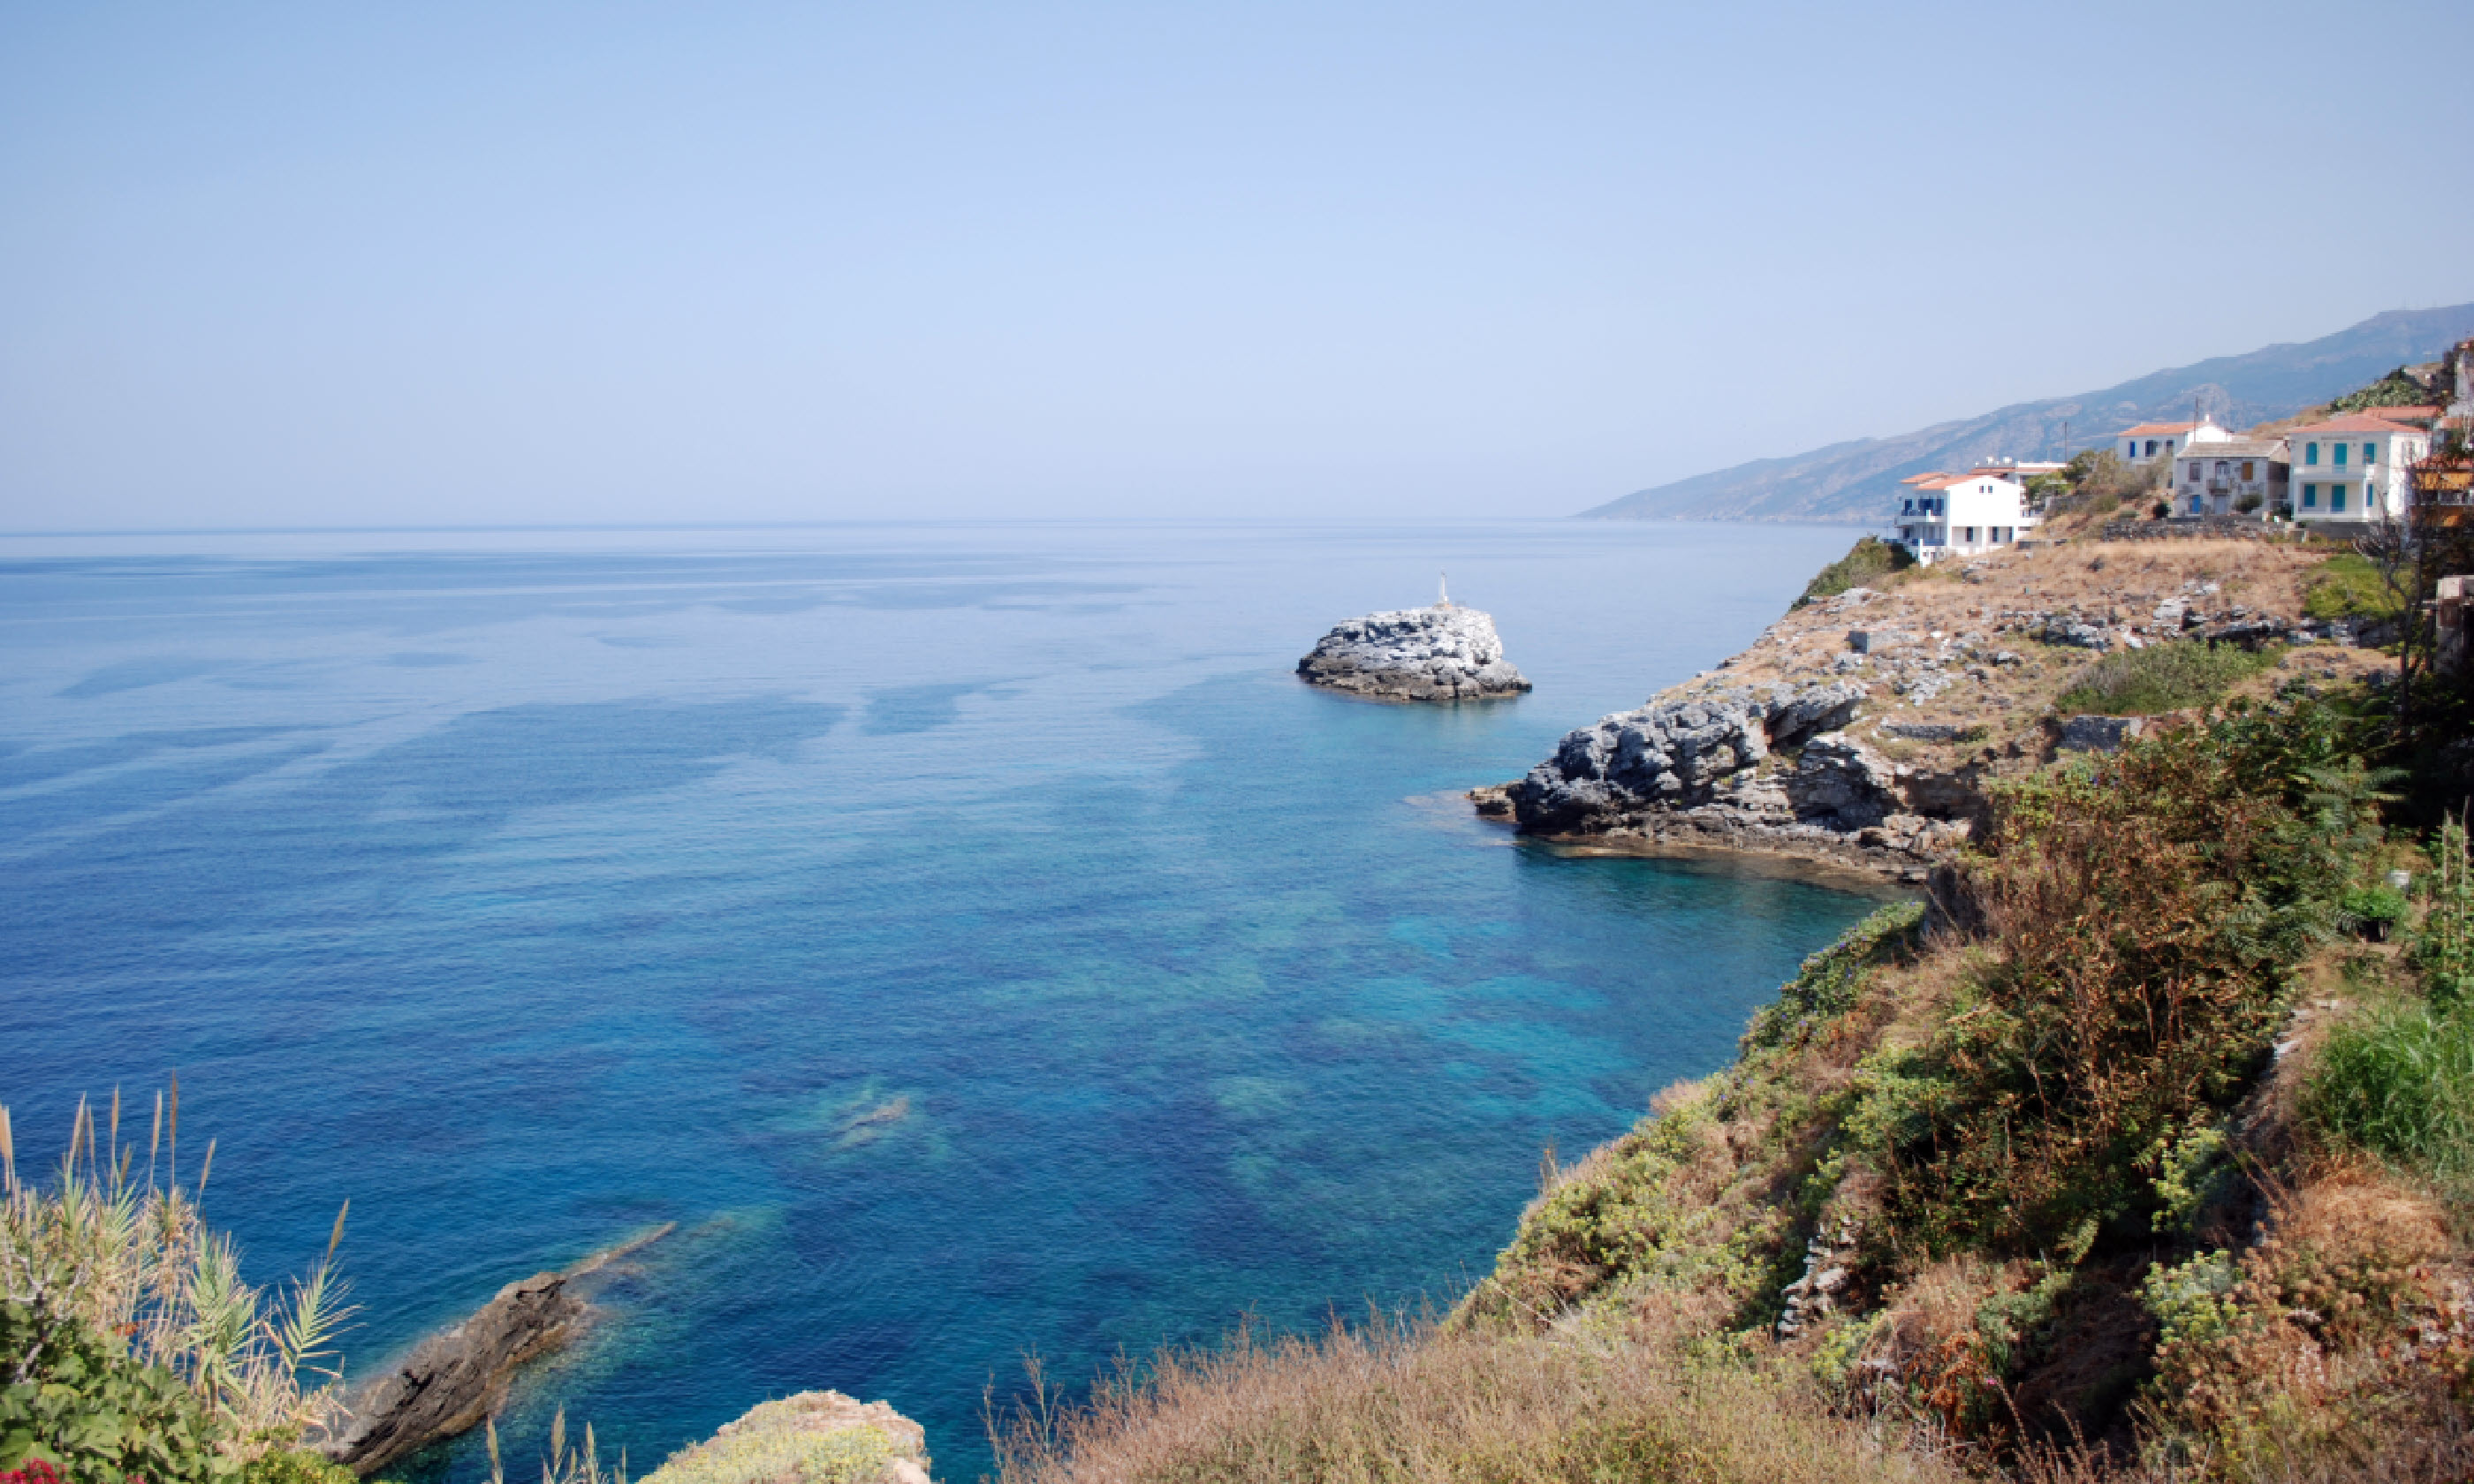 Ikaria, Greece (Flickr Creative Commons: almekri01)